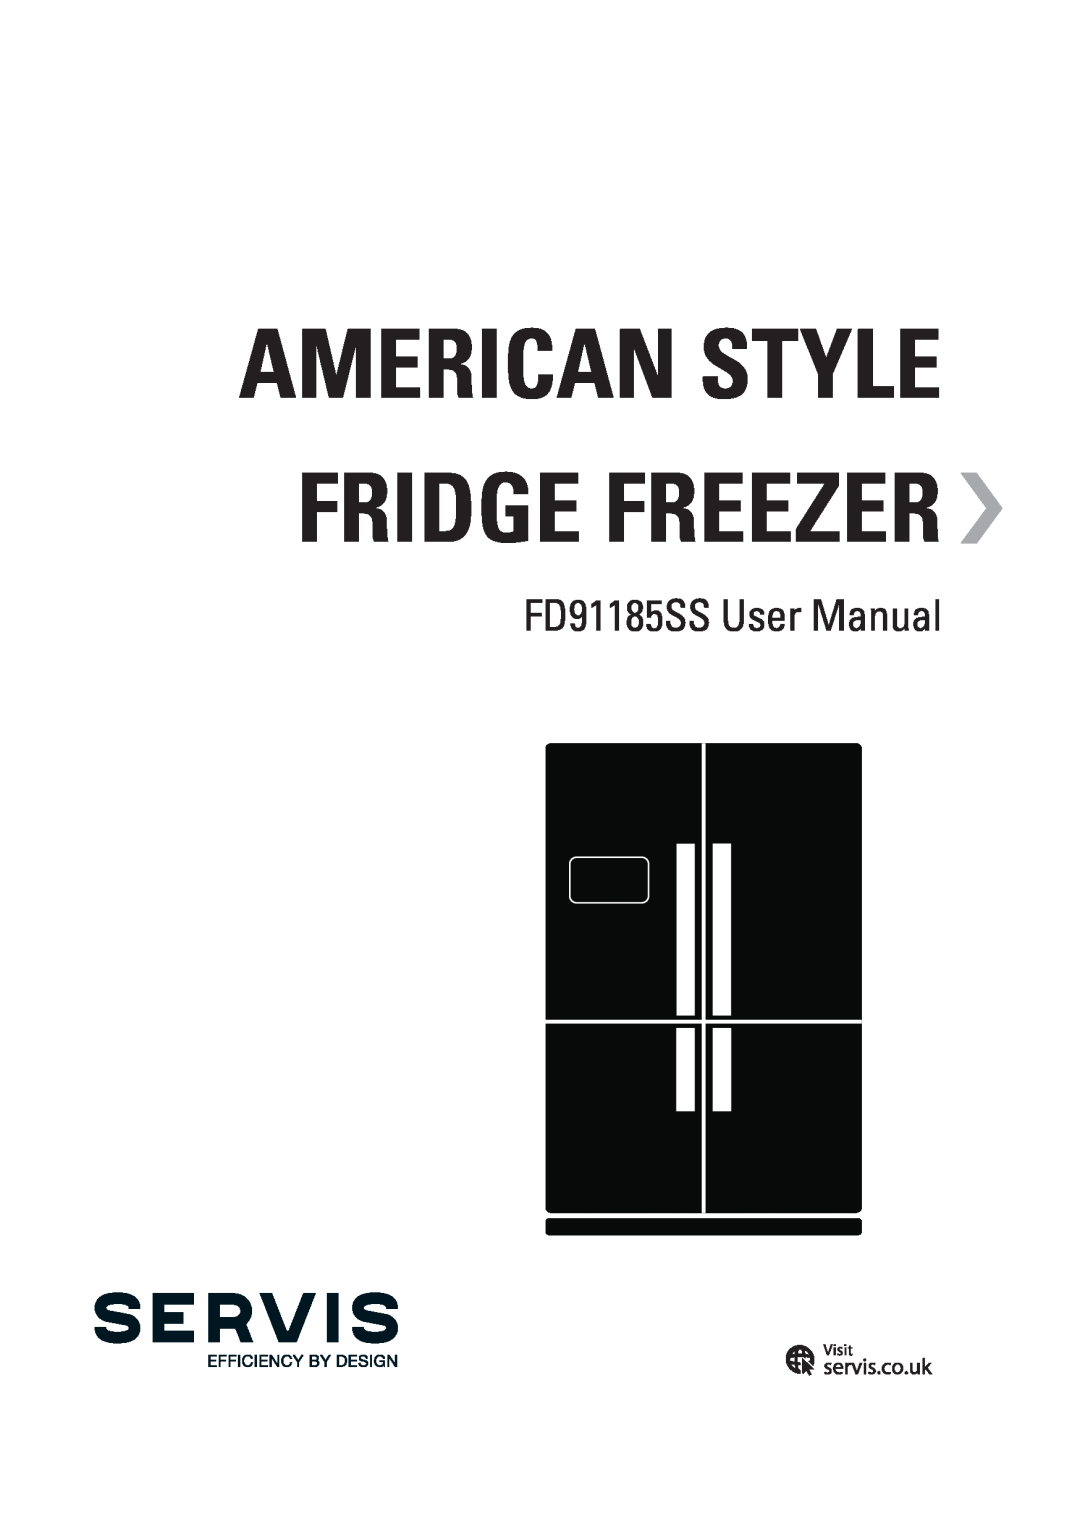 Servis AMERICAN STYLE FRIDGE FREEZER, FD91185SS user manual American Style Fridge Freezer 